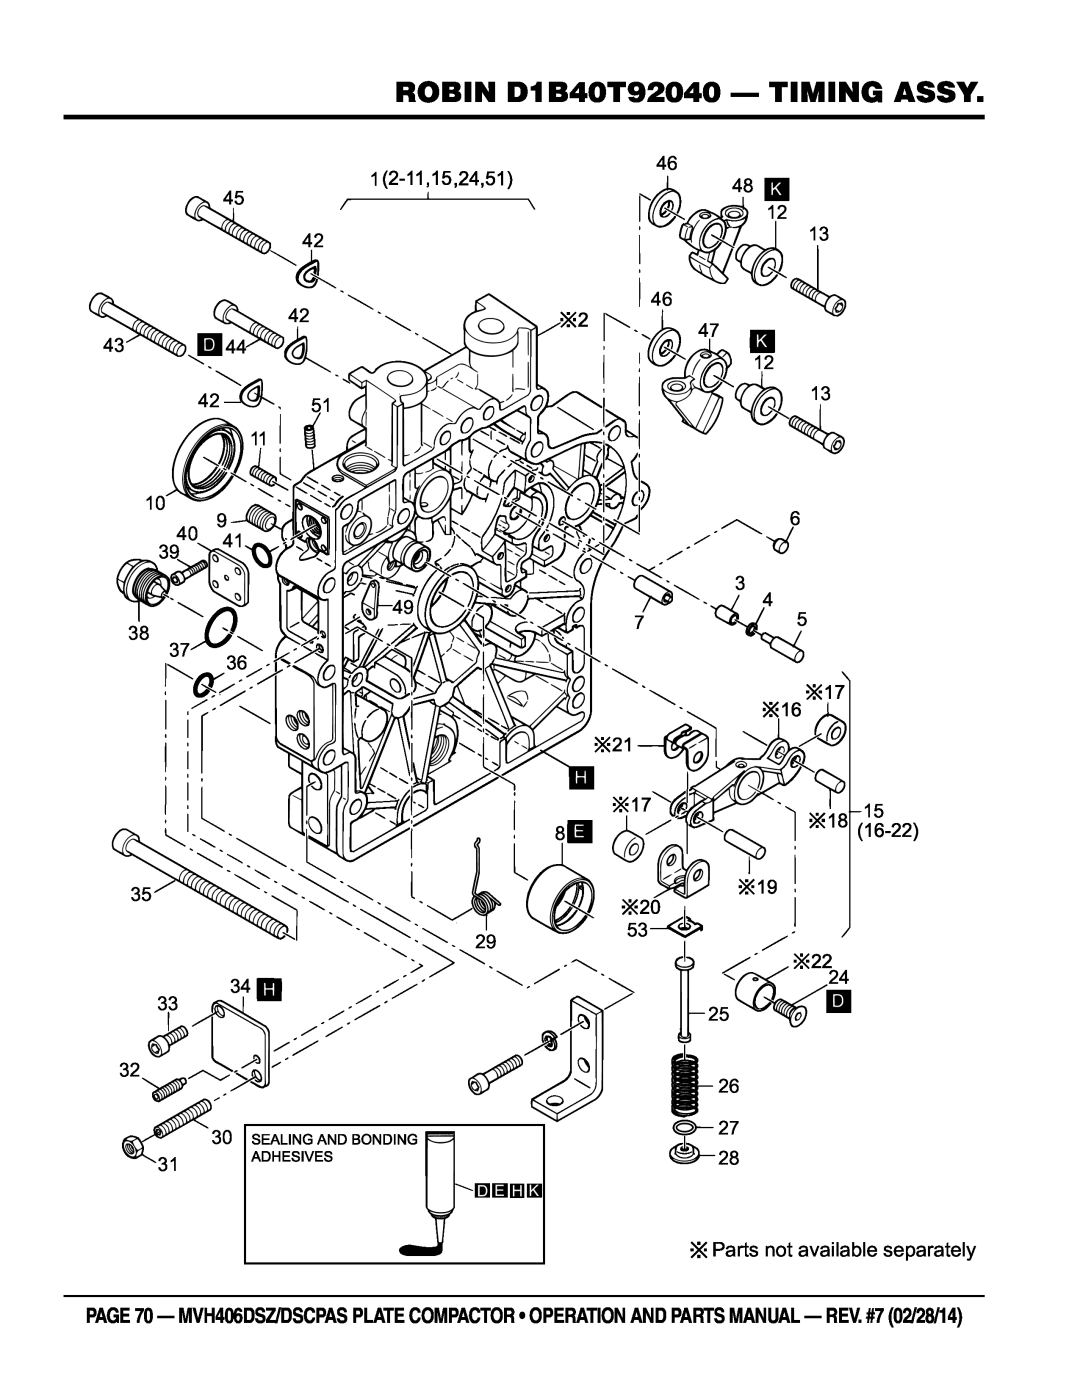 Multiquip MVH406DSZ, MVH406DSCPAS manual ROBIN D1B40T92040 - timing ASSY, Parts not available separately, D E H K 